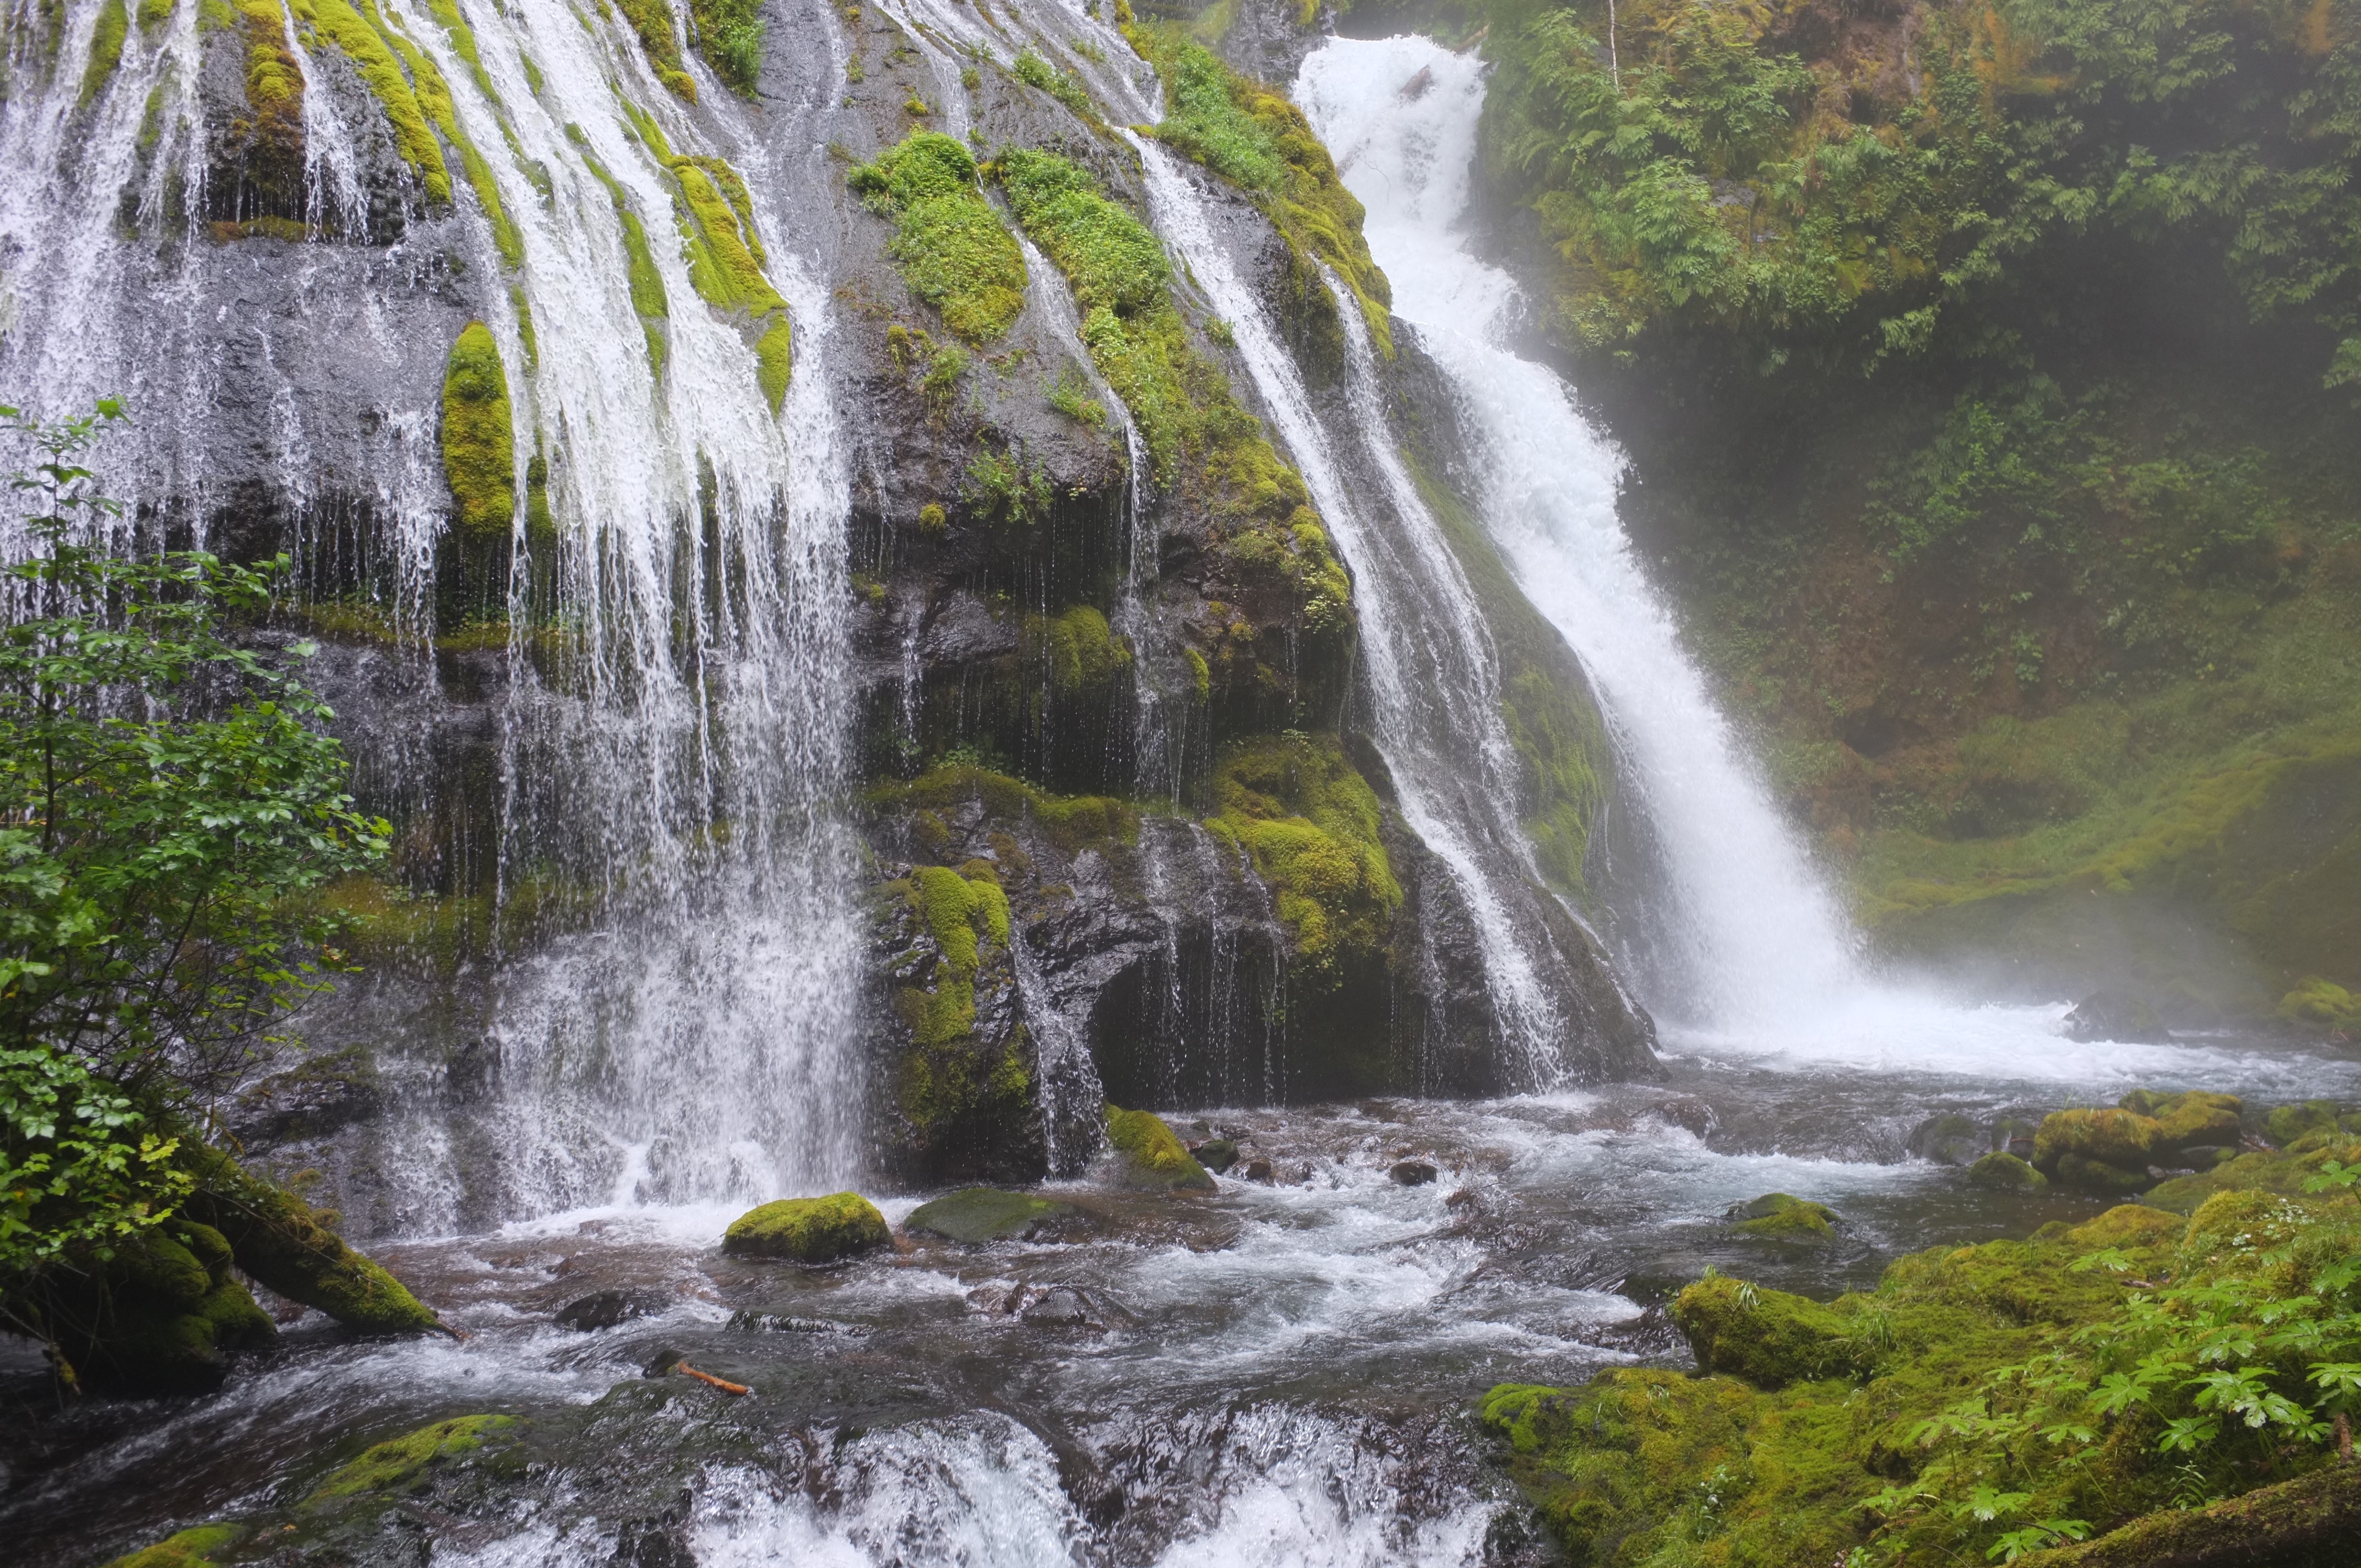 Panther creek falls: the best waterfall hikes near portland oregon